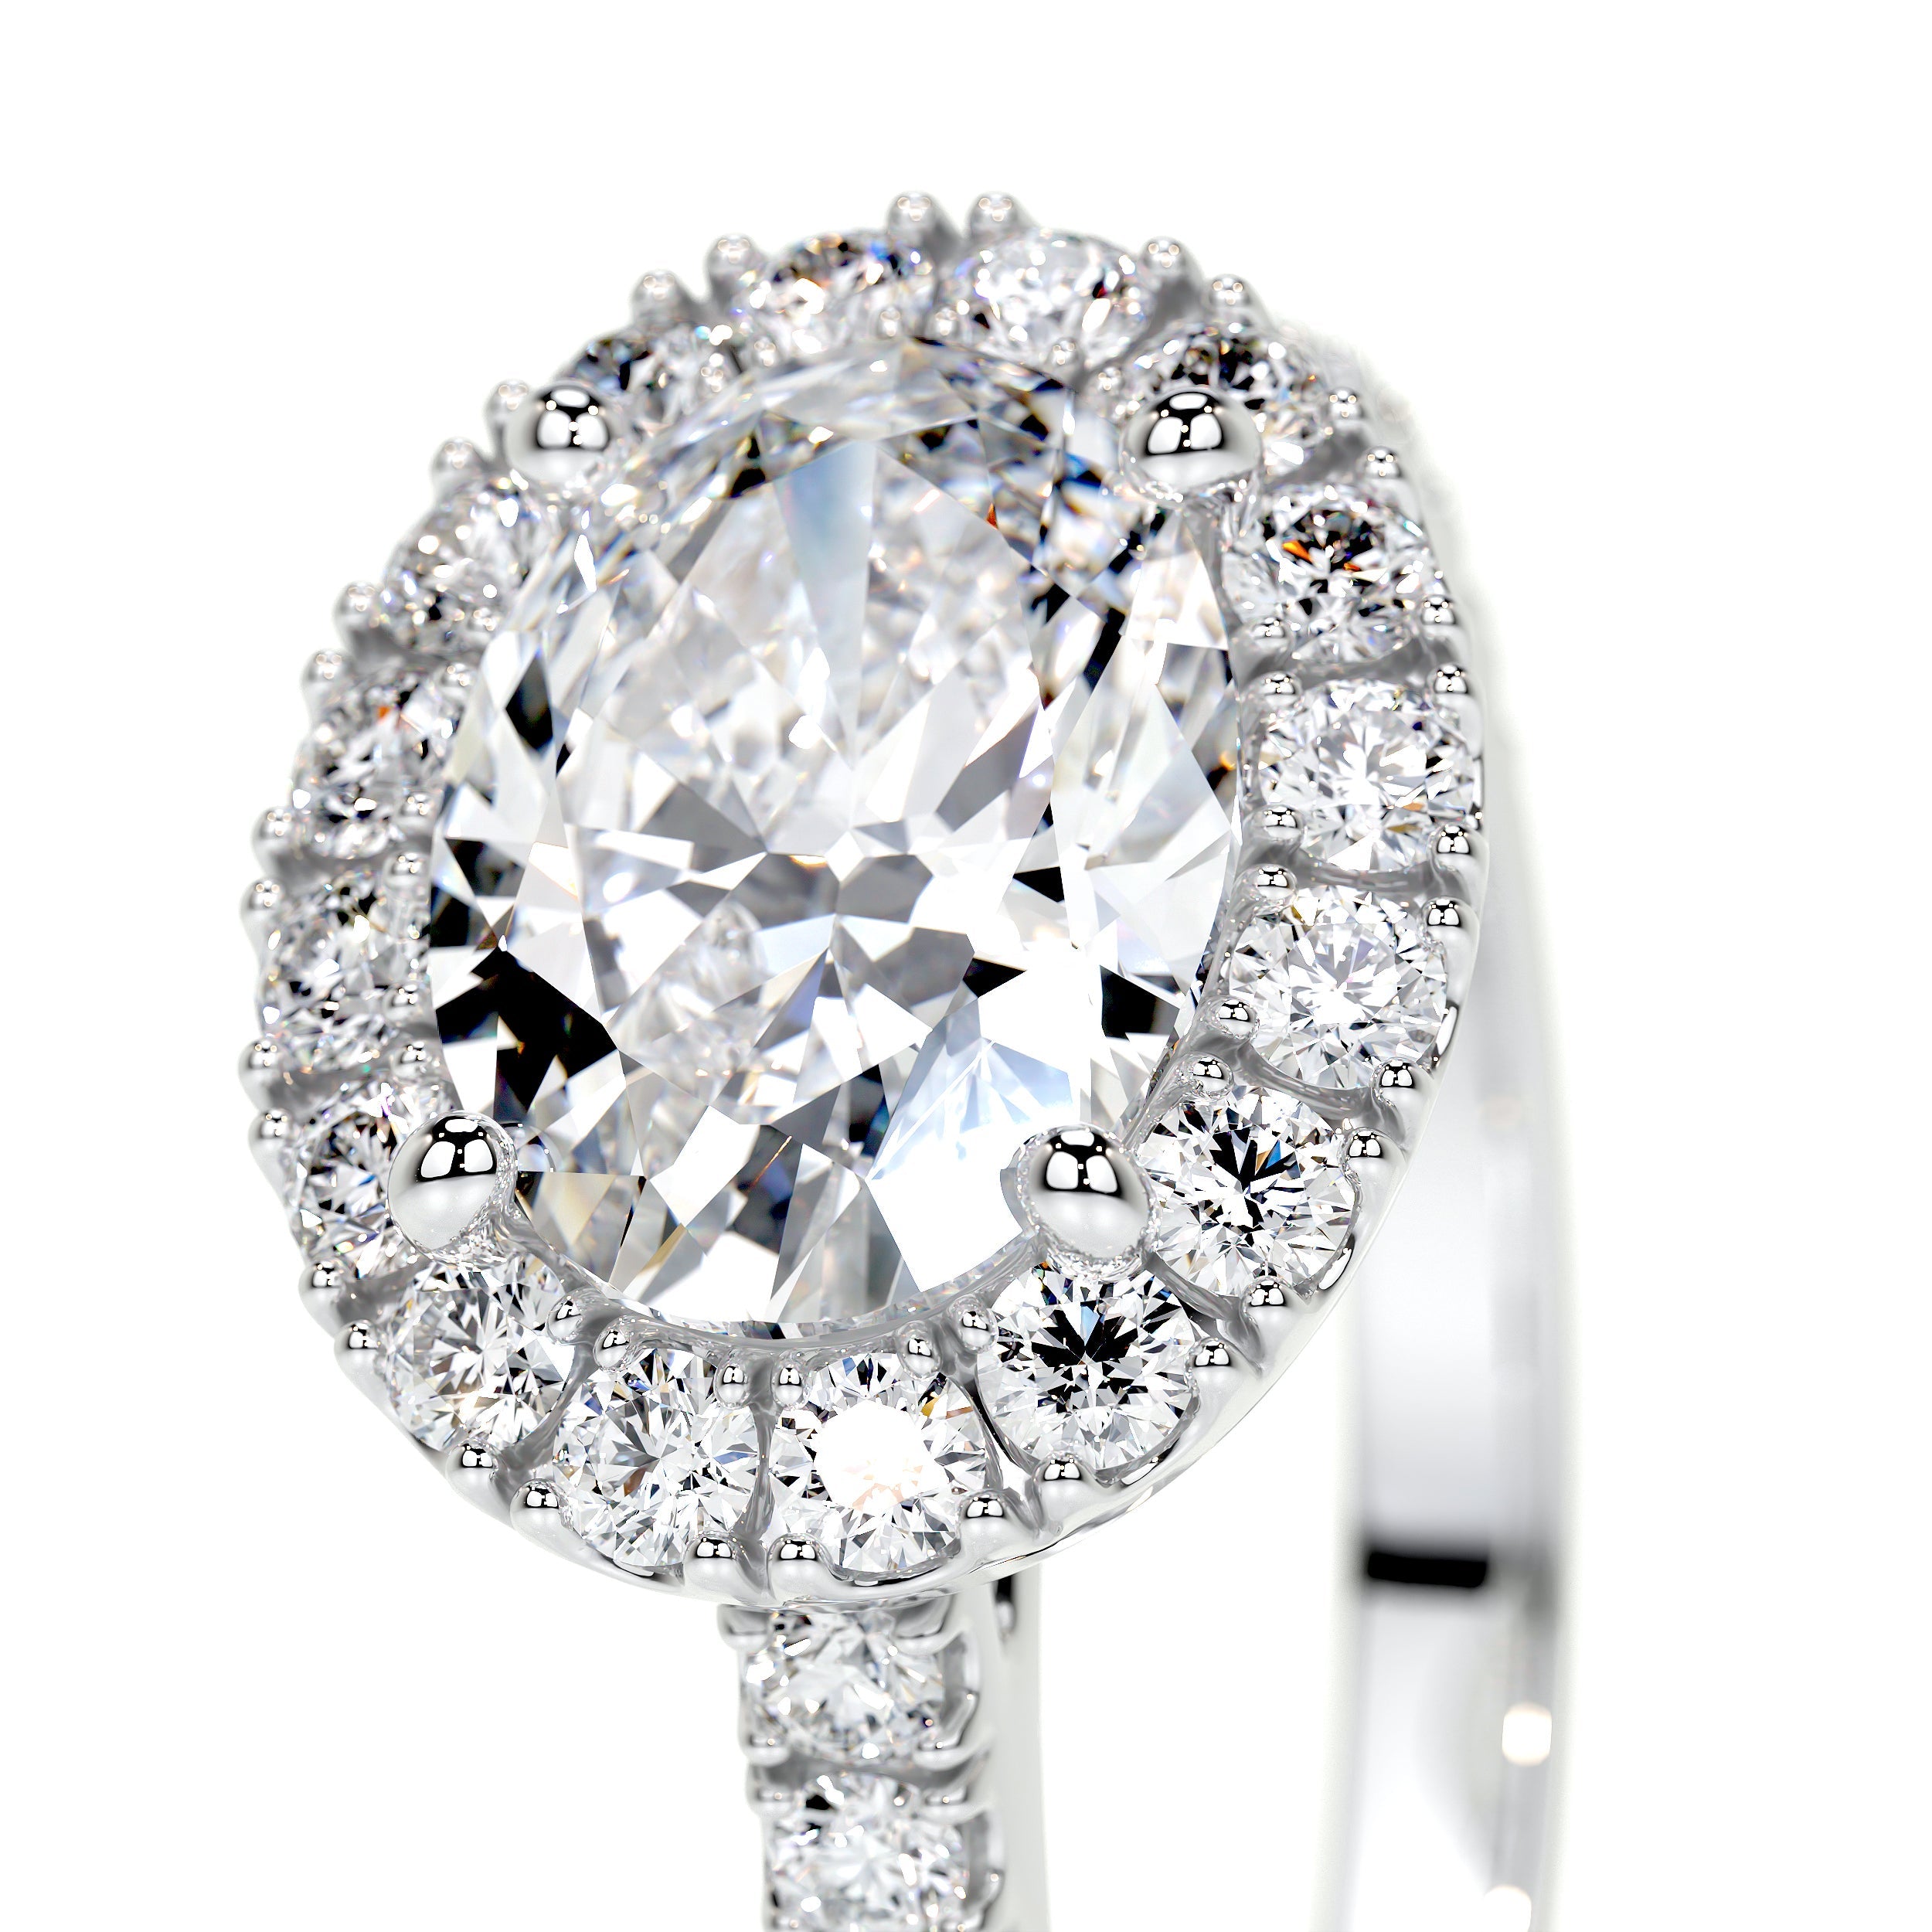 Alessandra Lab Grown Diamond Ring   (1.30 Carat) -Platinum